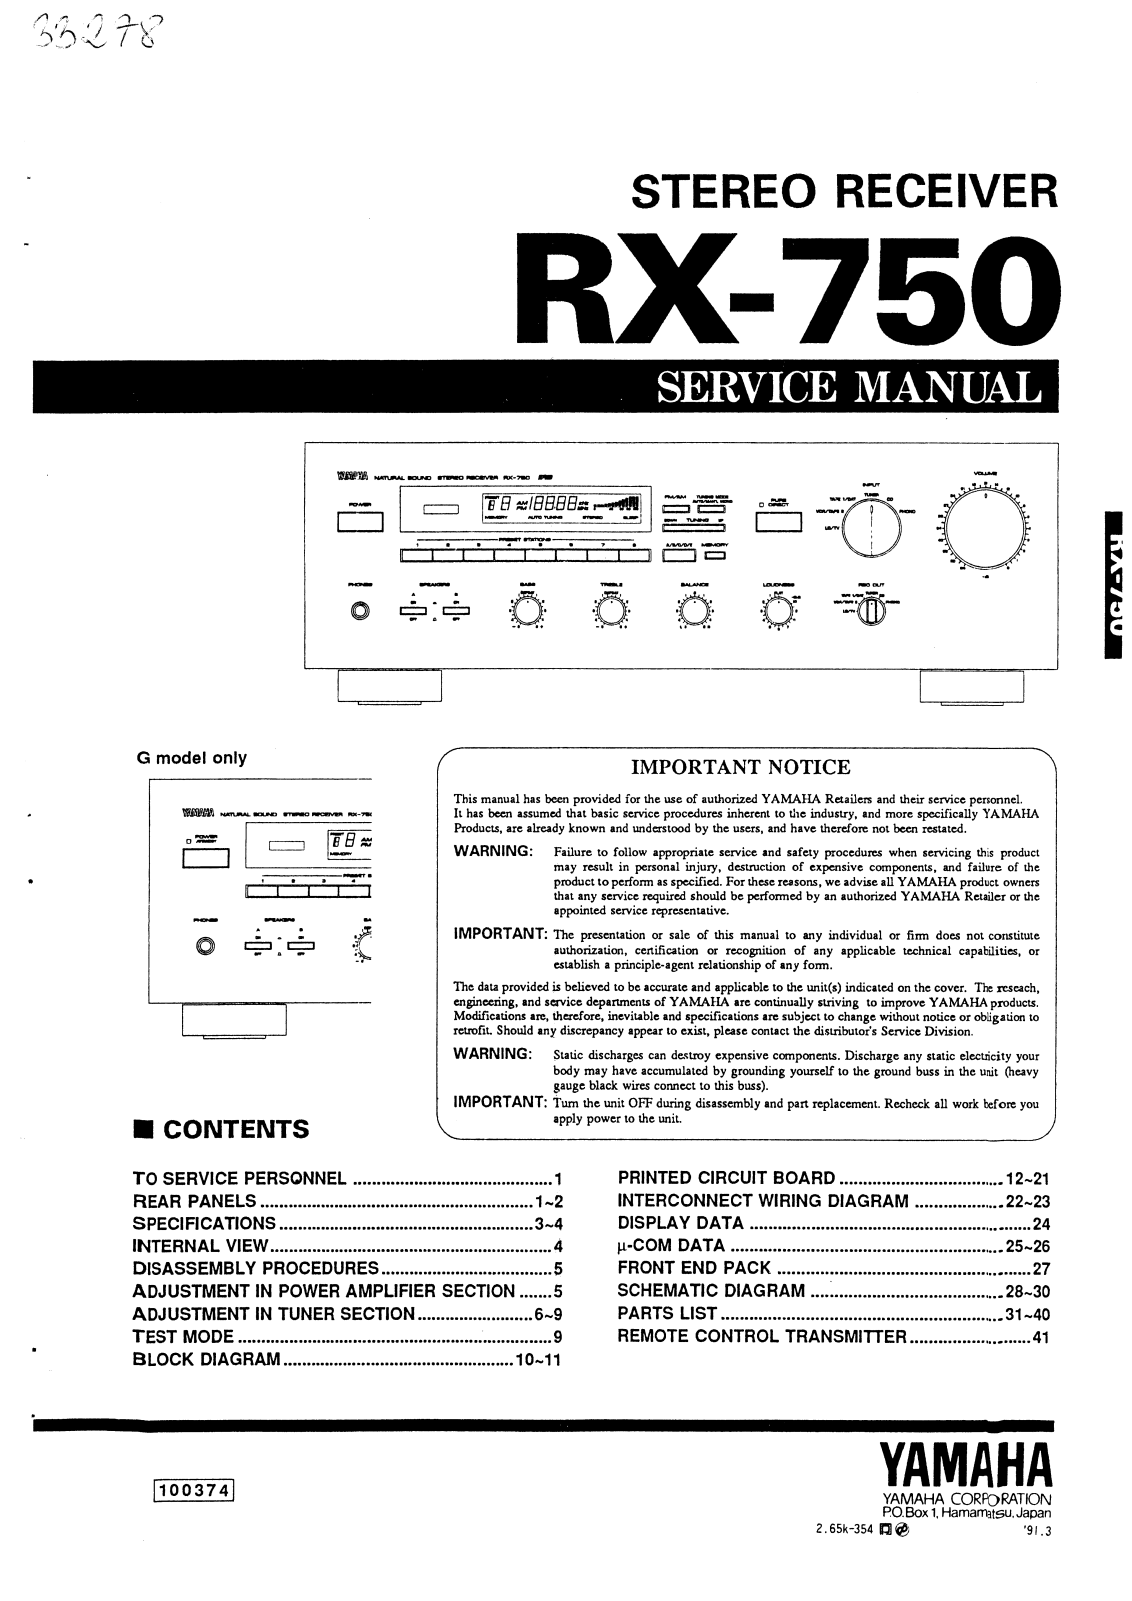 Yamaha RX-750 Service Manual